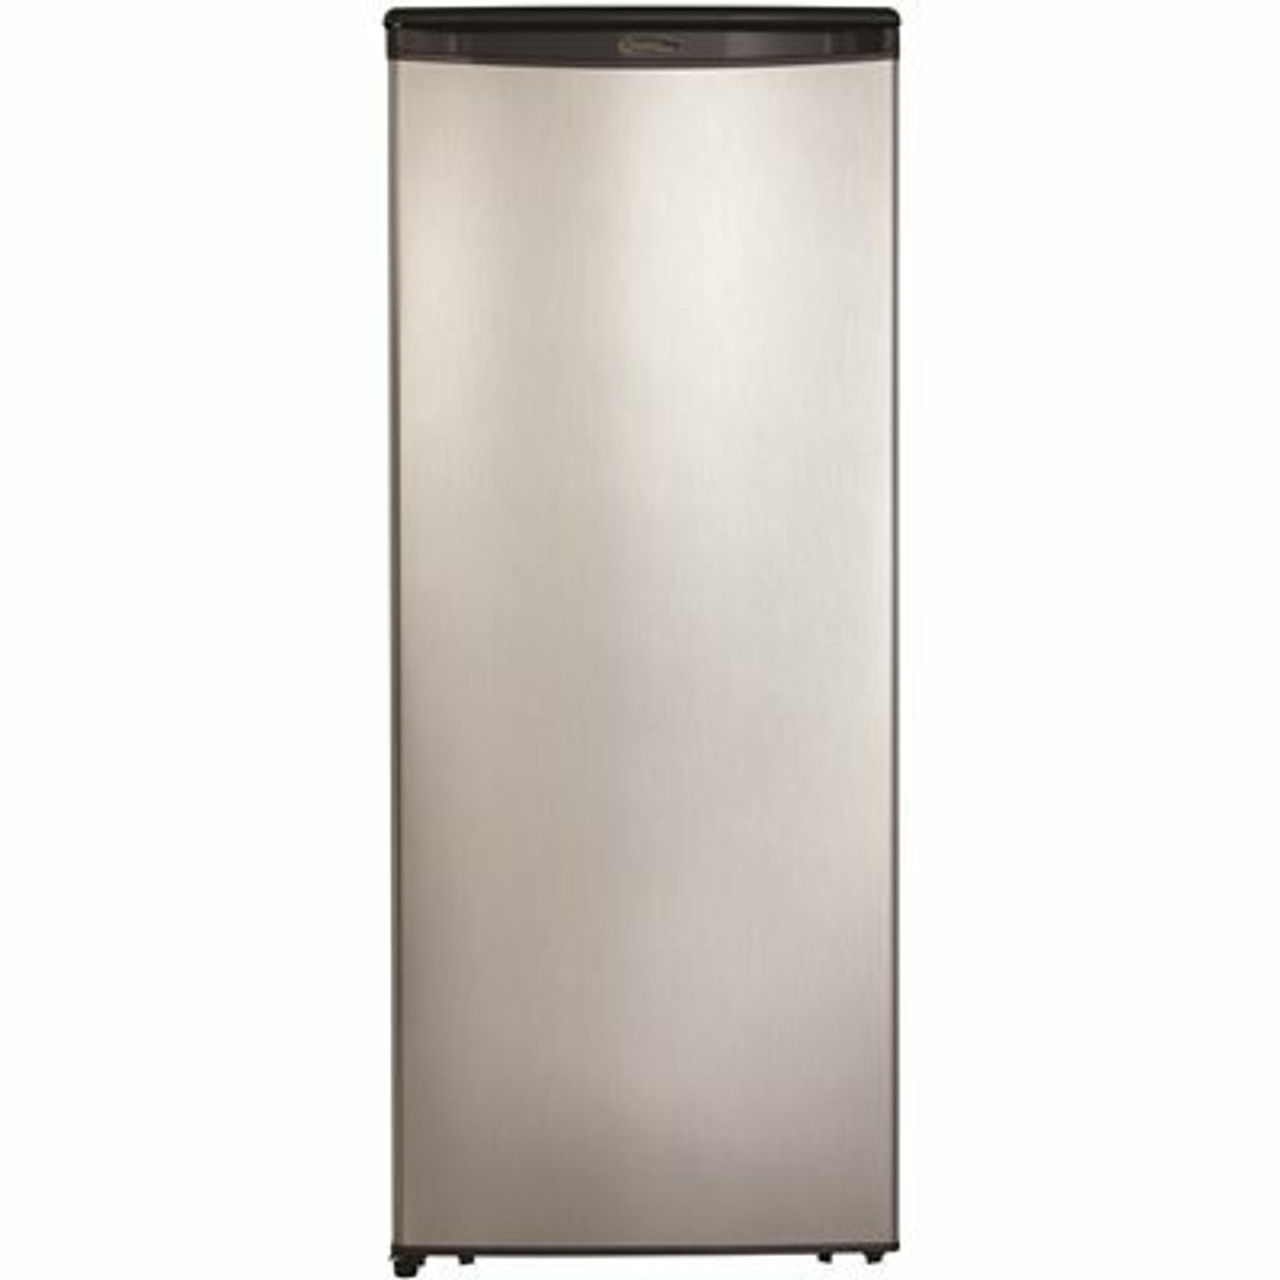 Danby 24 In. W 11.0 Cu. Ft. Freezerless Refrigerator In Stainless Steel, Counter Depth